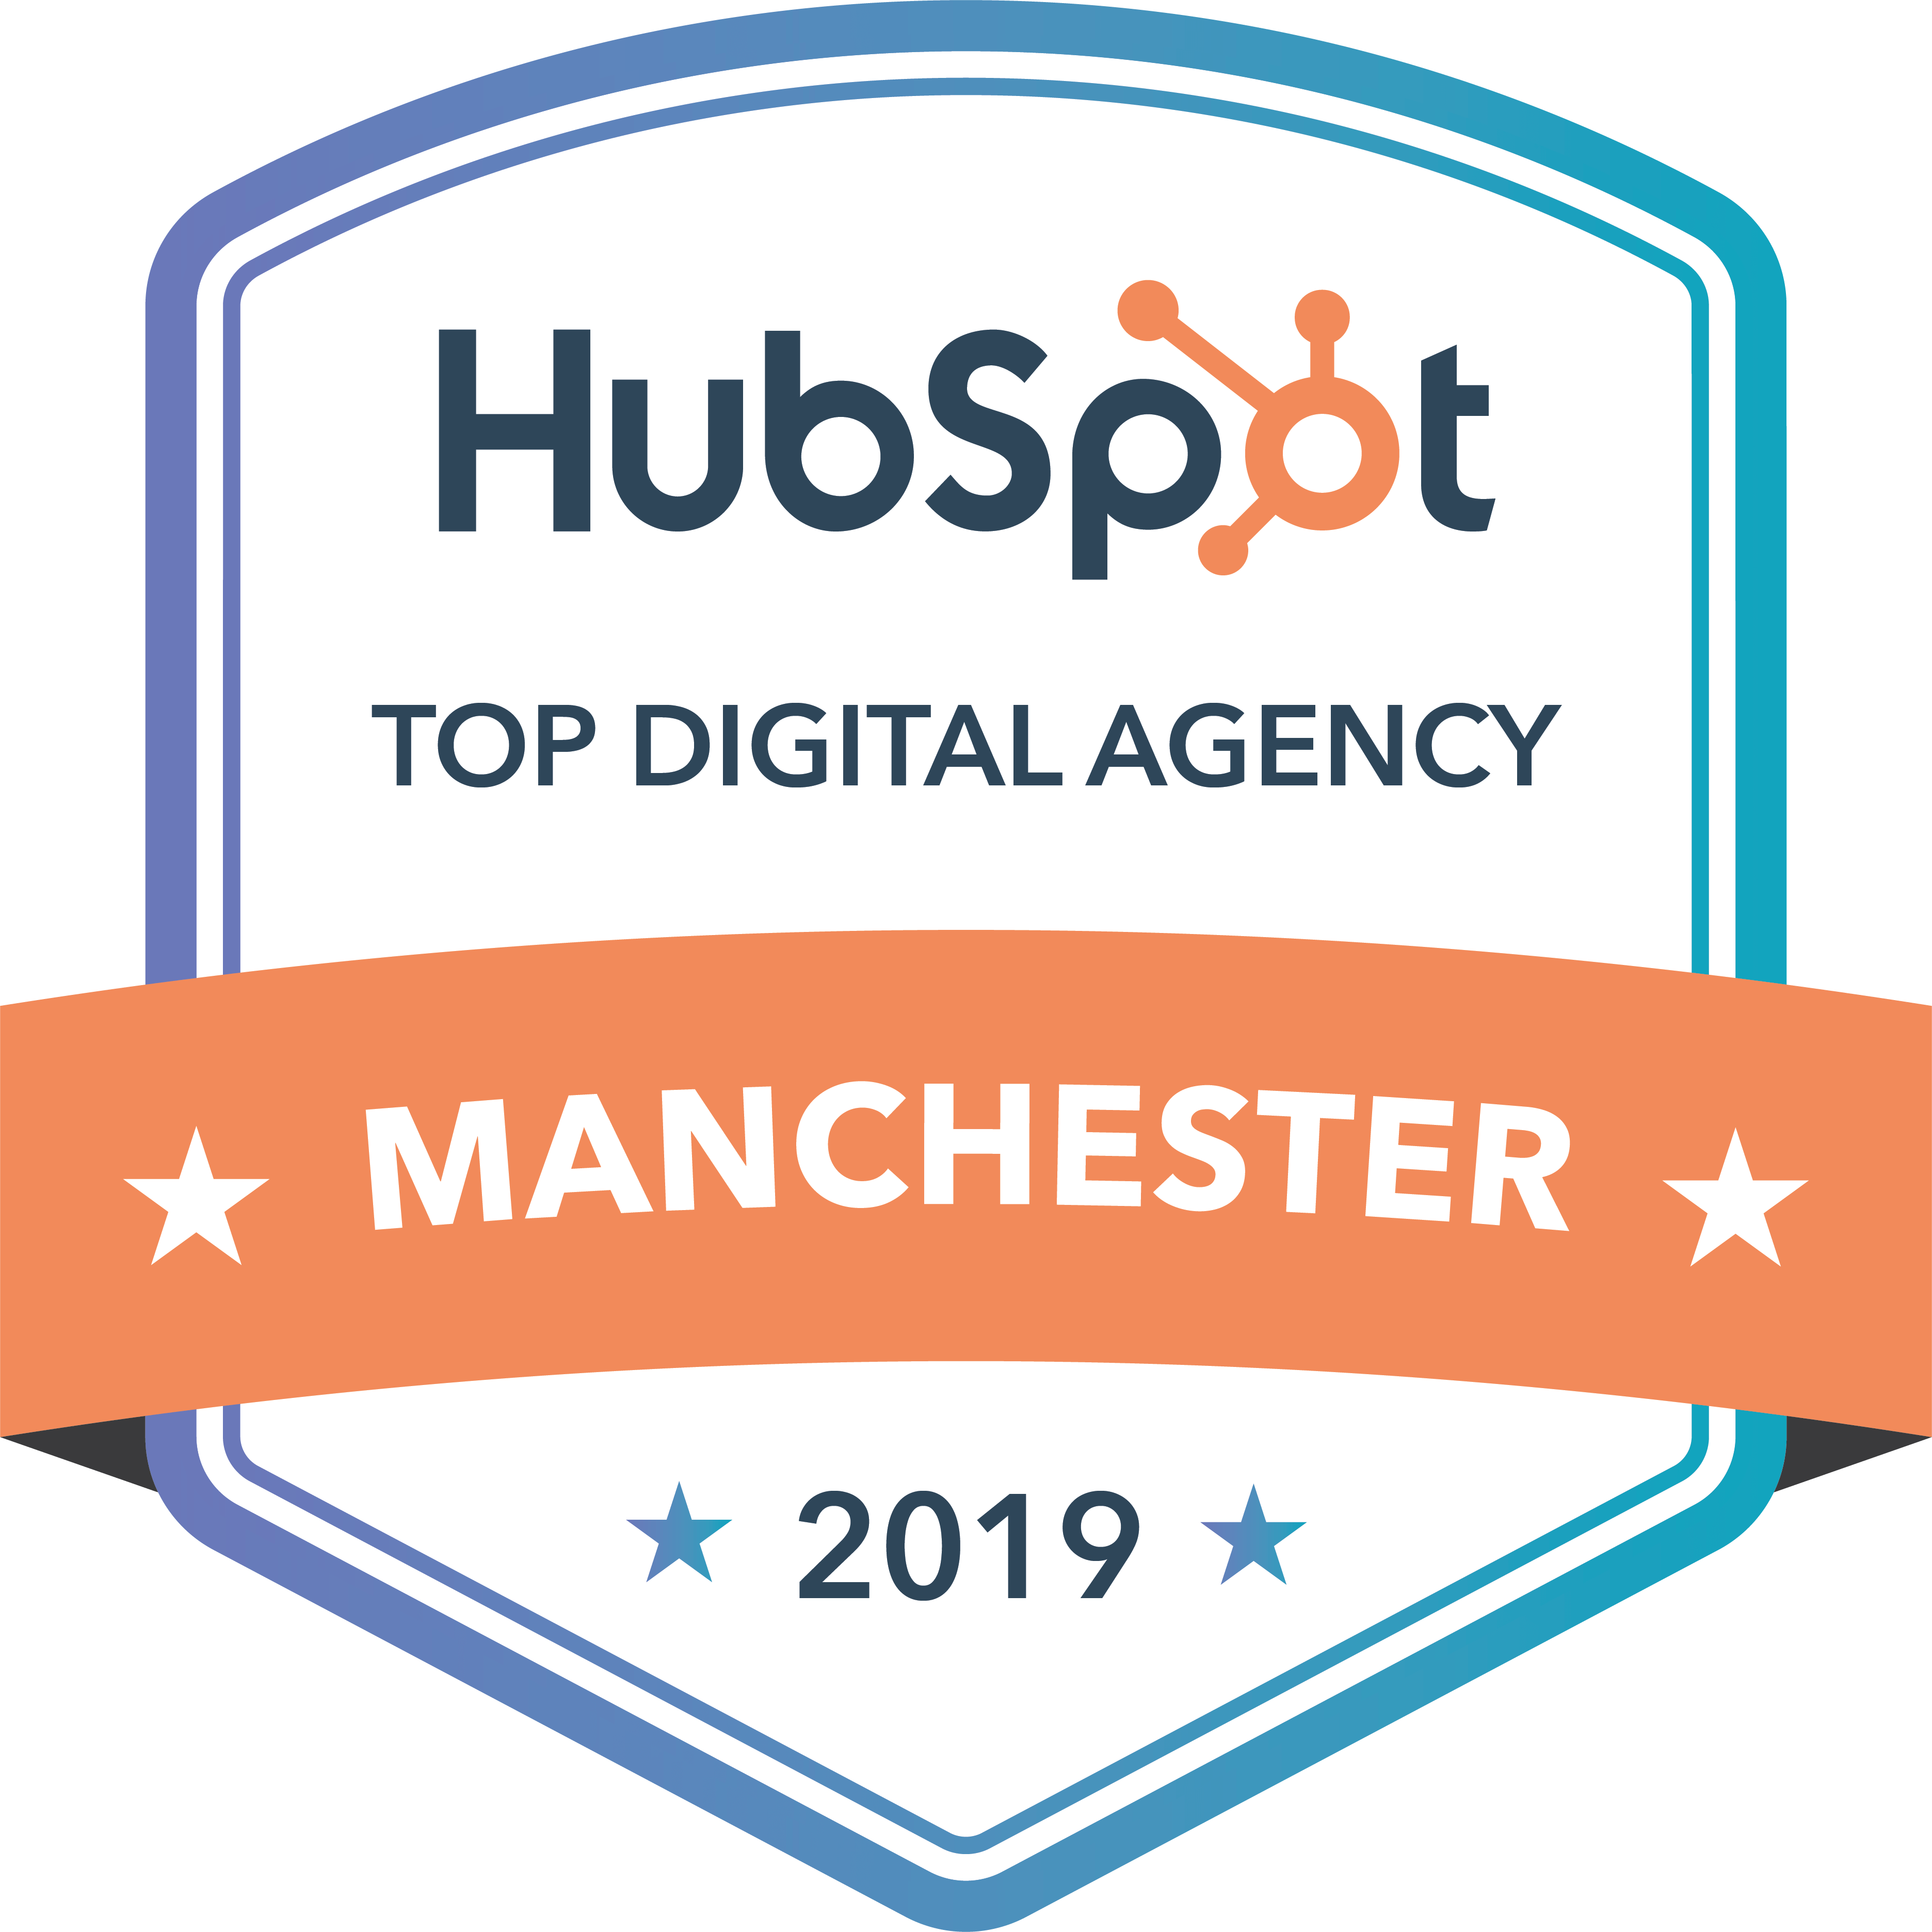 Top Digital Agency Manchester 2019